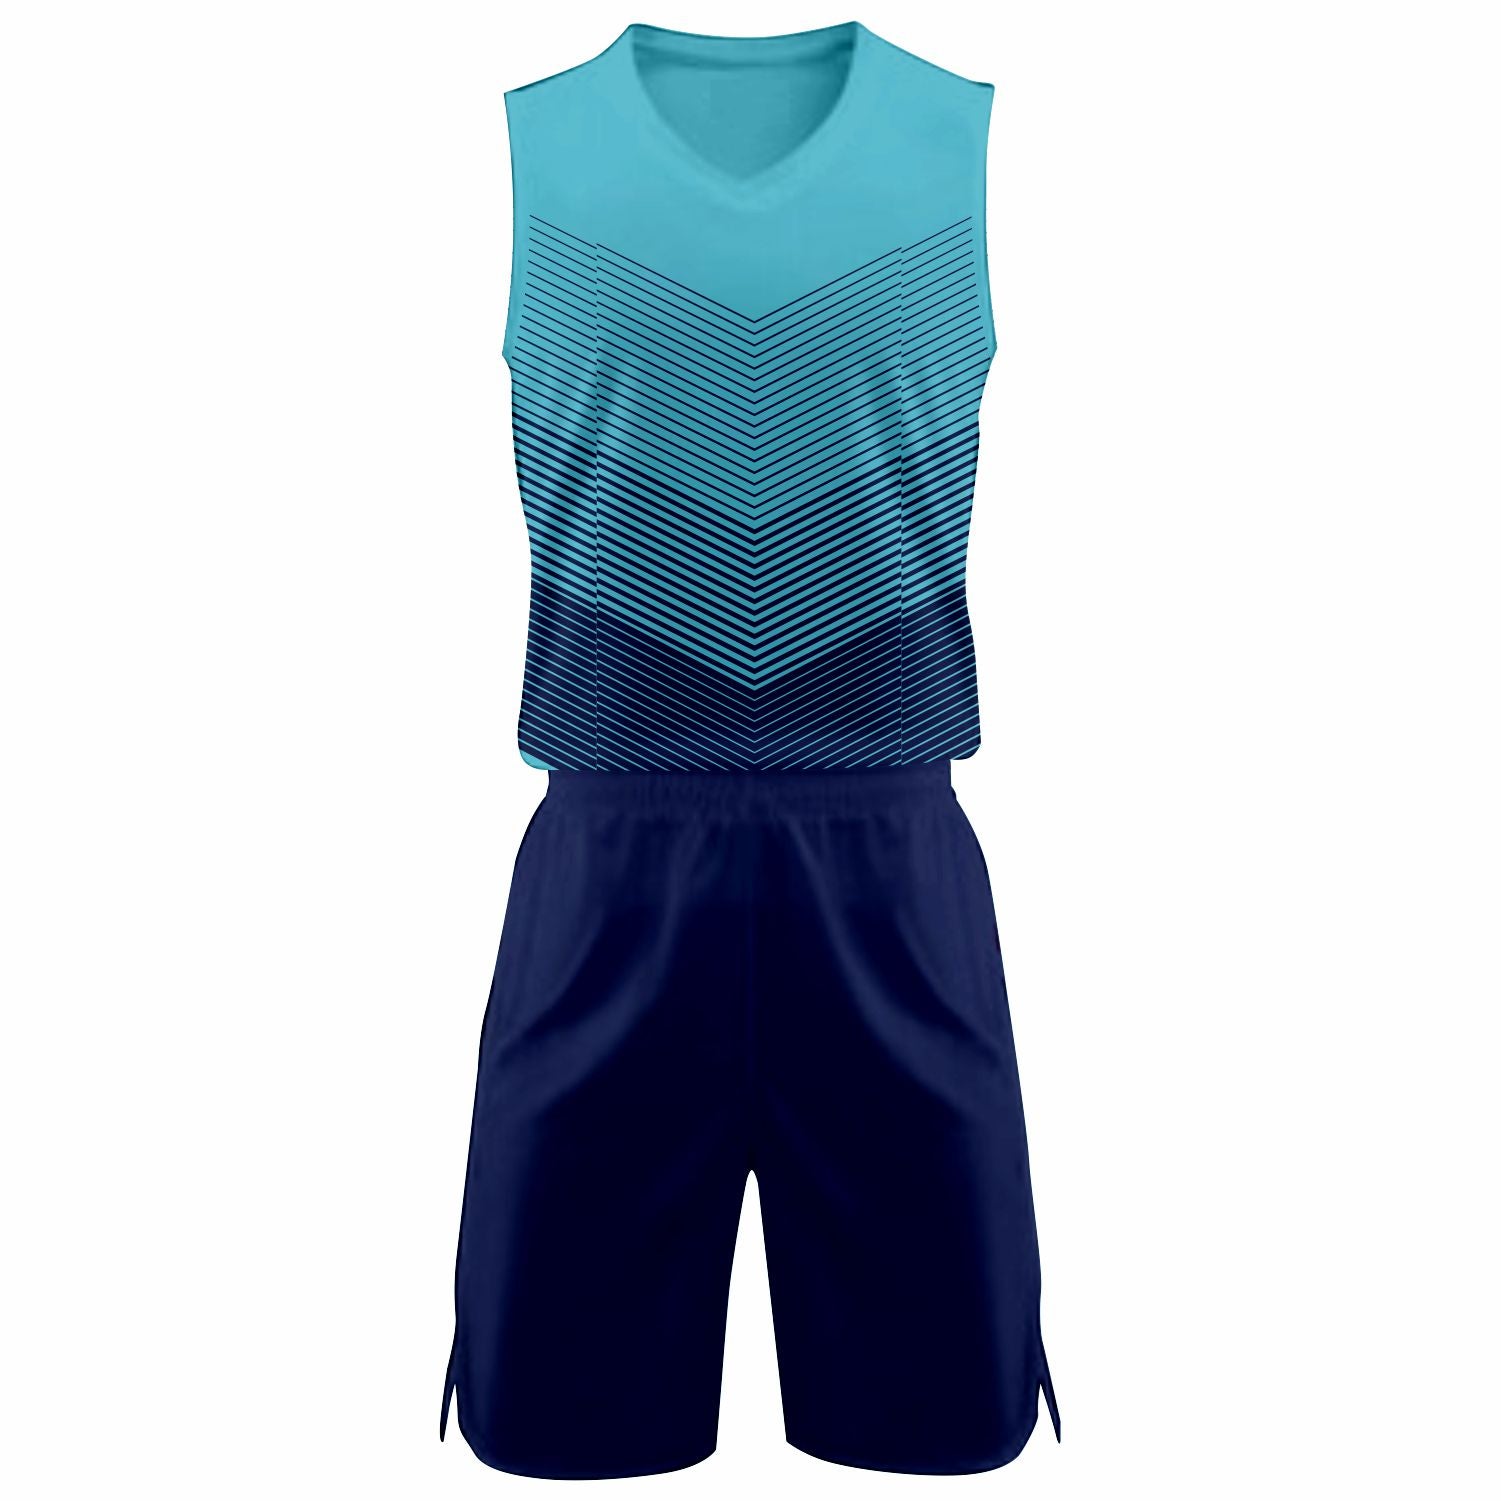 Faze NS Basketball Uniform with Customization Option, Blue